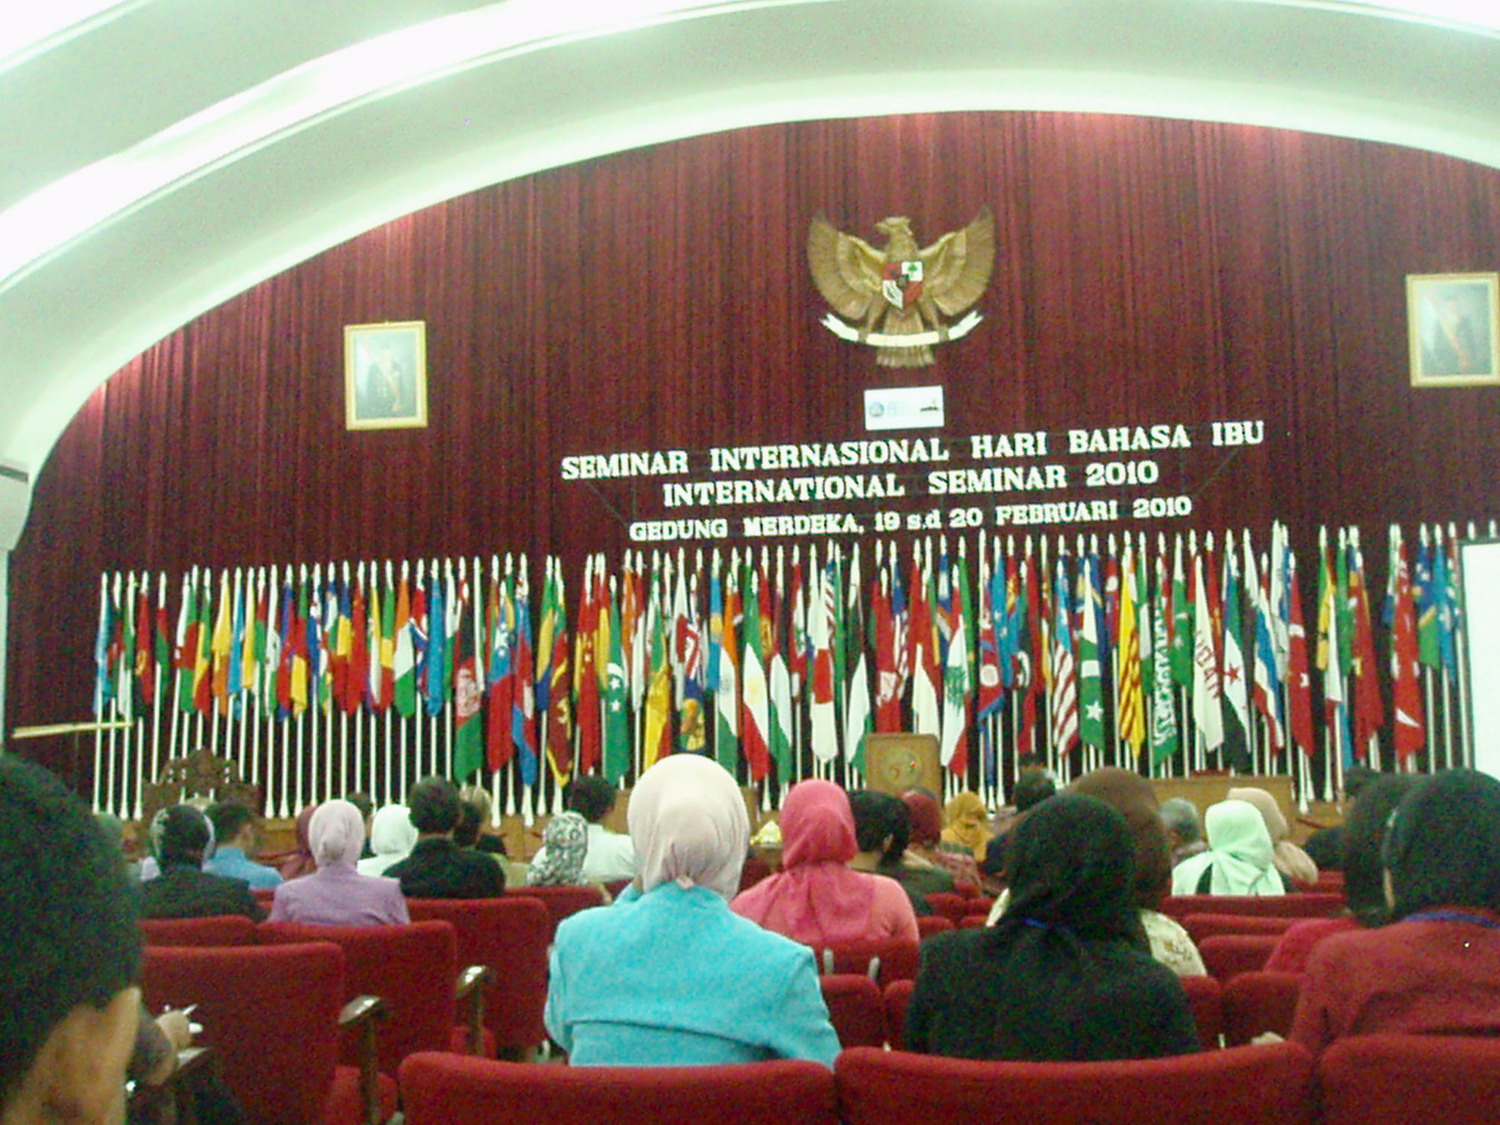 Seminar Internasional Hari Bahasa Ibu 2010, Gedung Merdeka Bandung